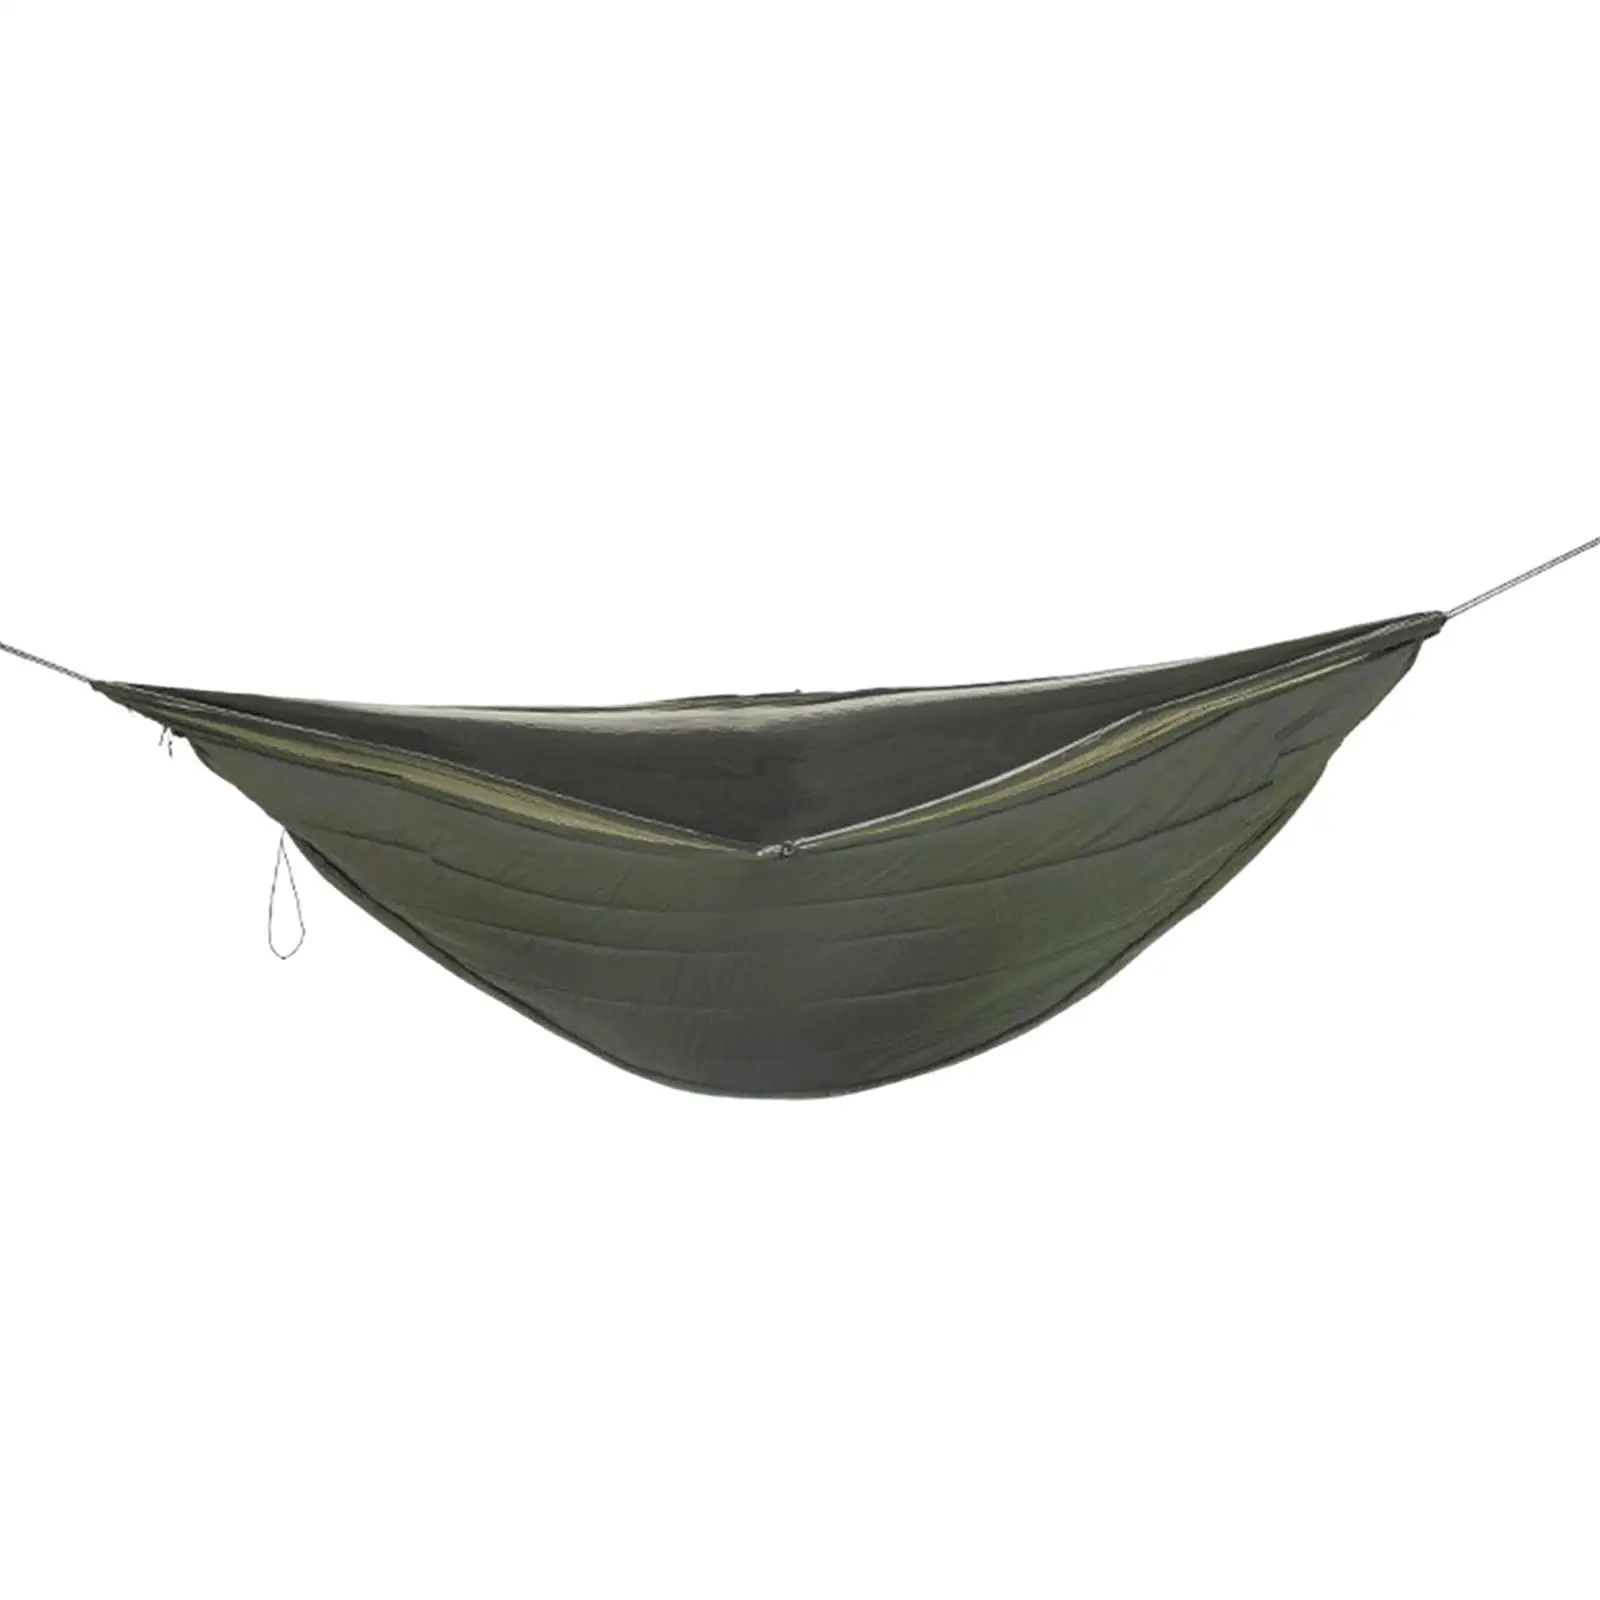 Hammock Underquilt Large Under Blanket Camping Sleeping Bag for Travel